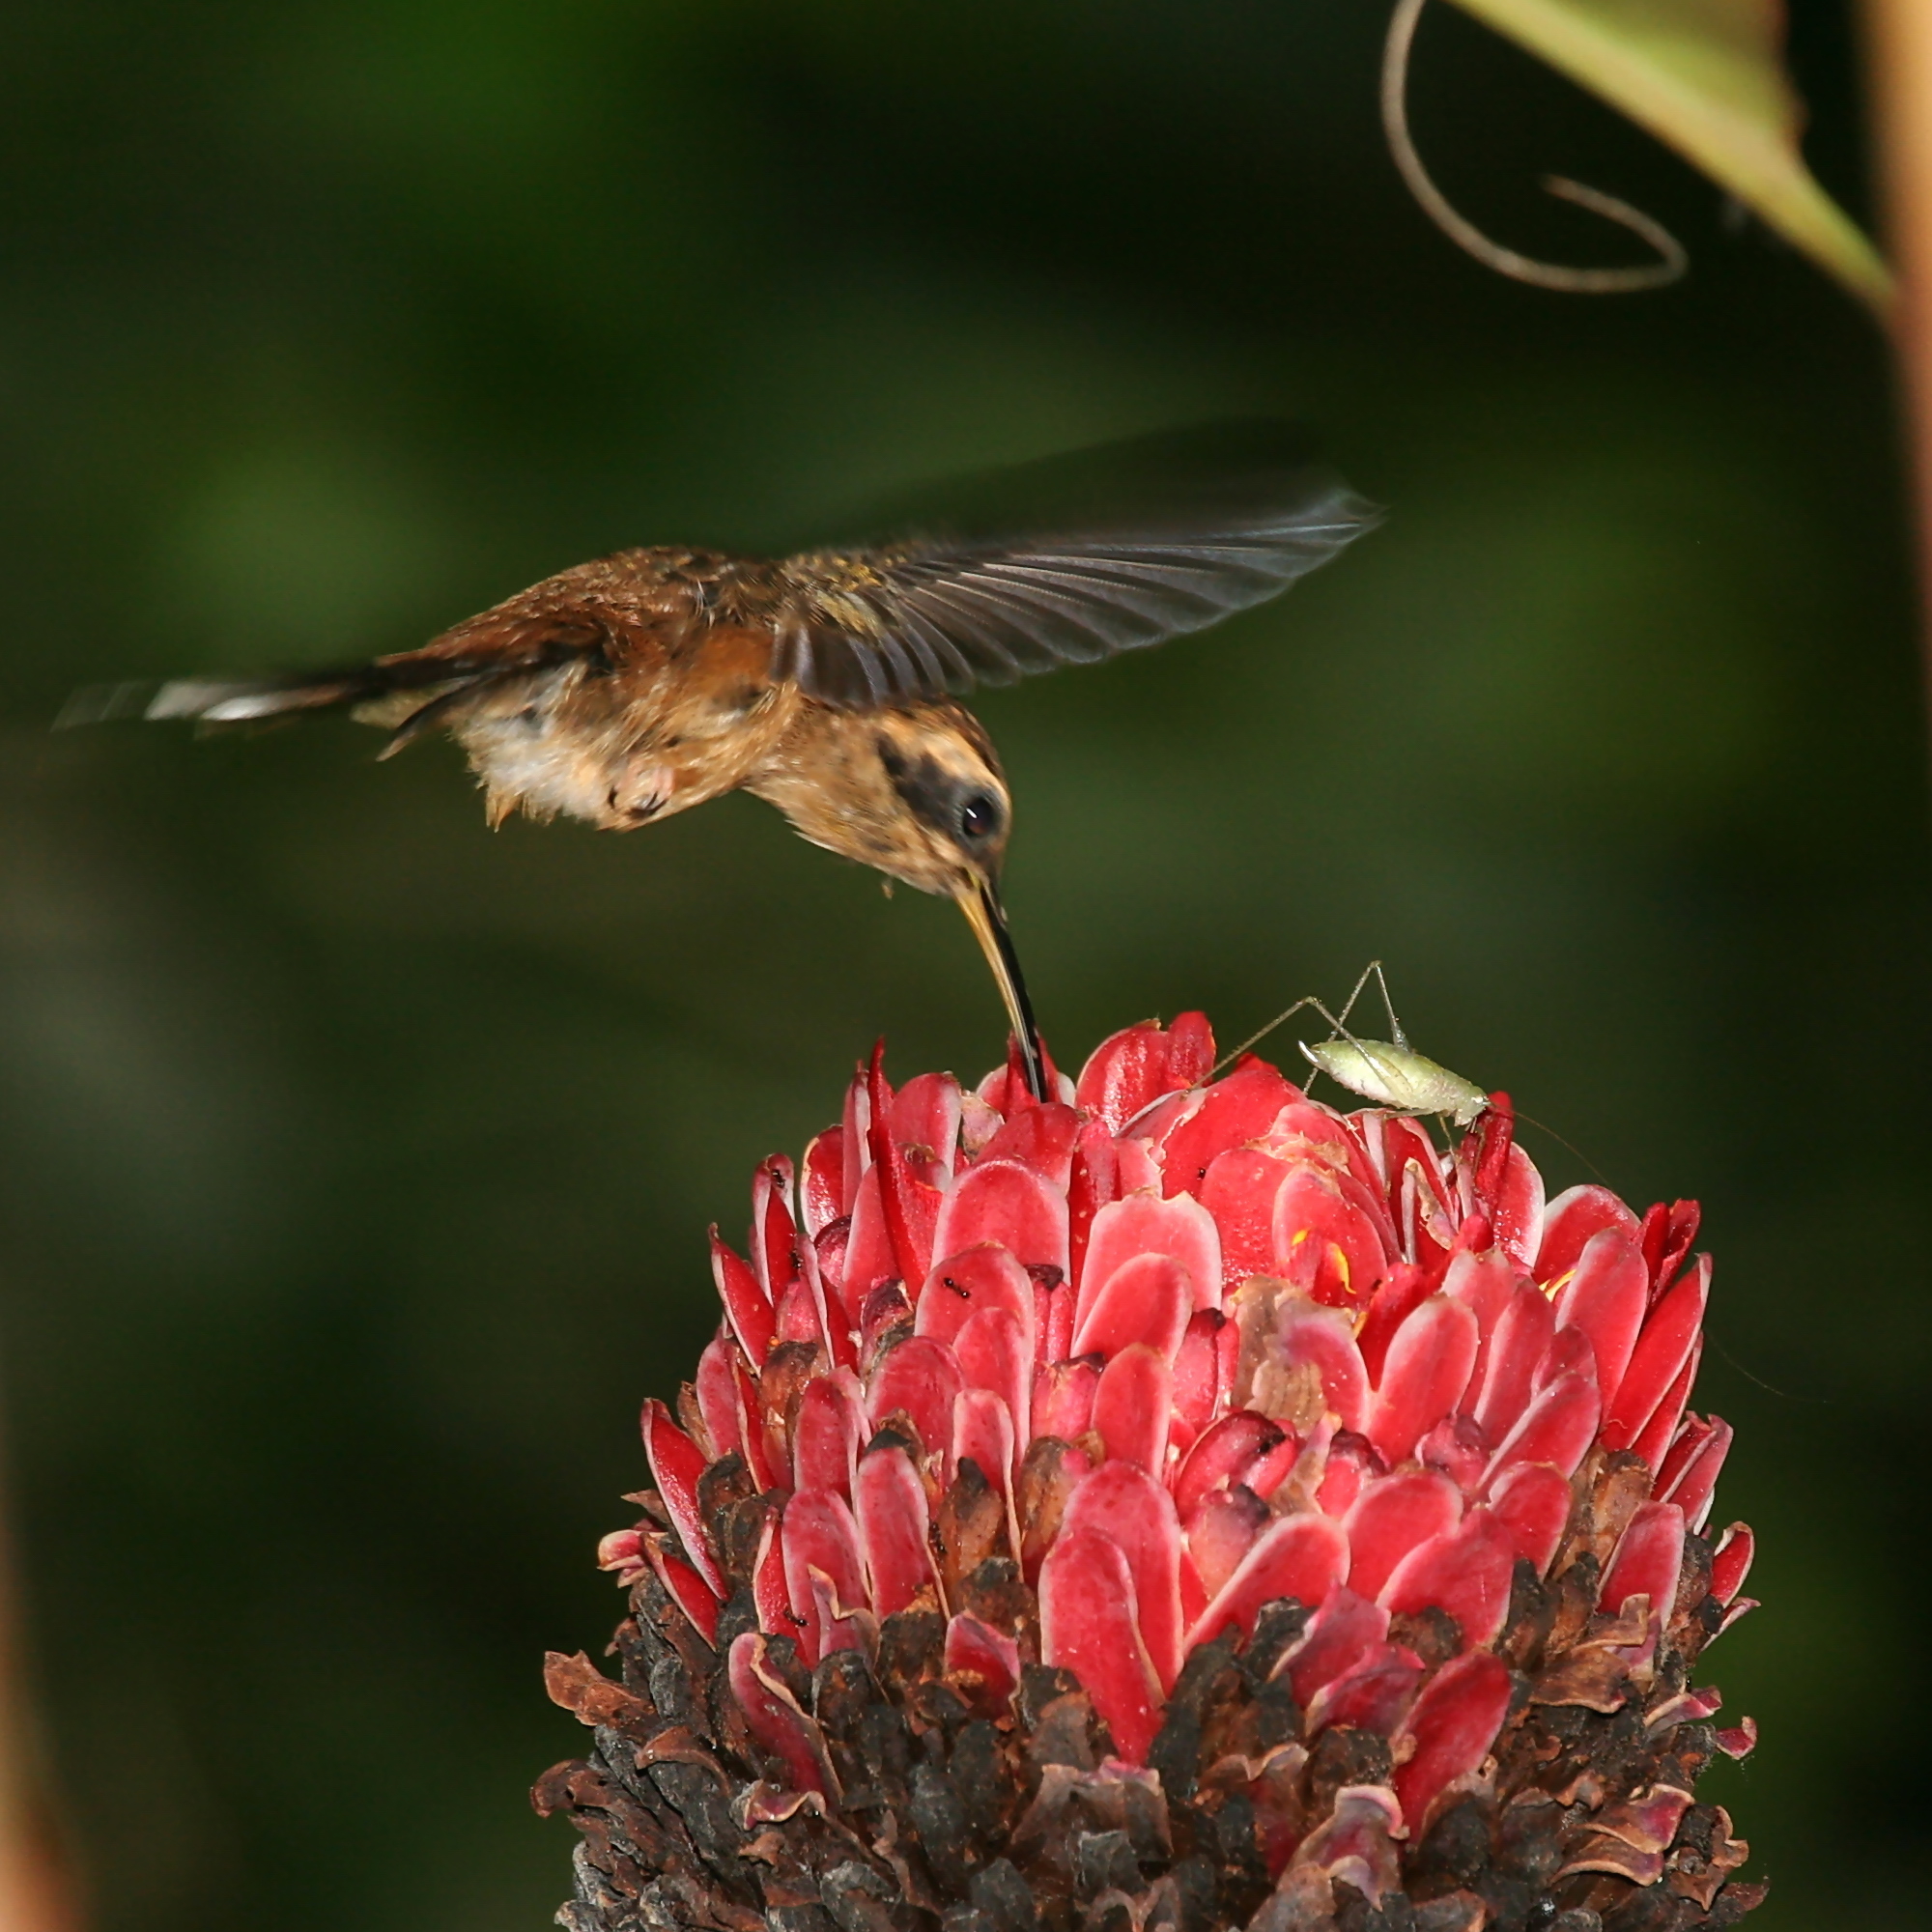 Hummingbird eat mosquitoes